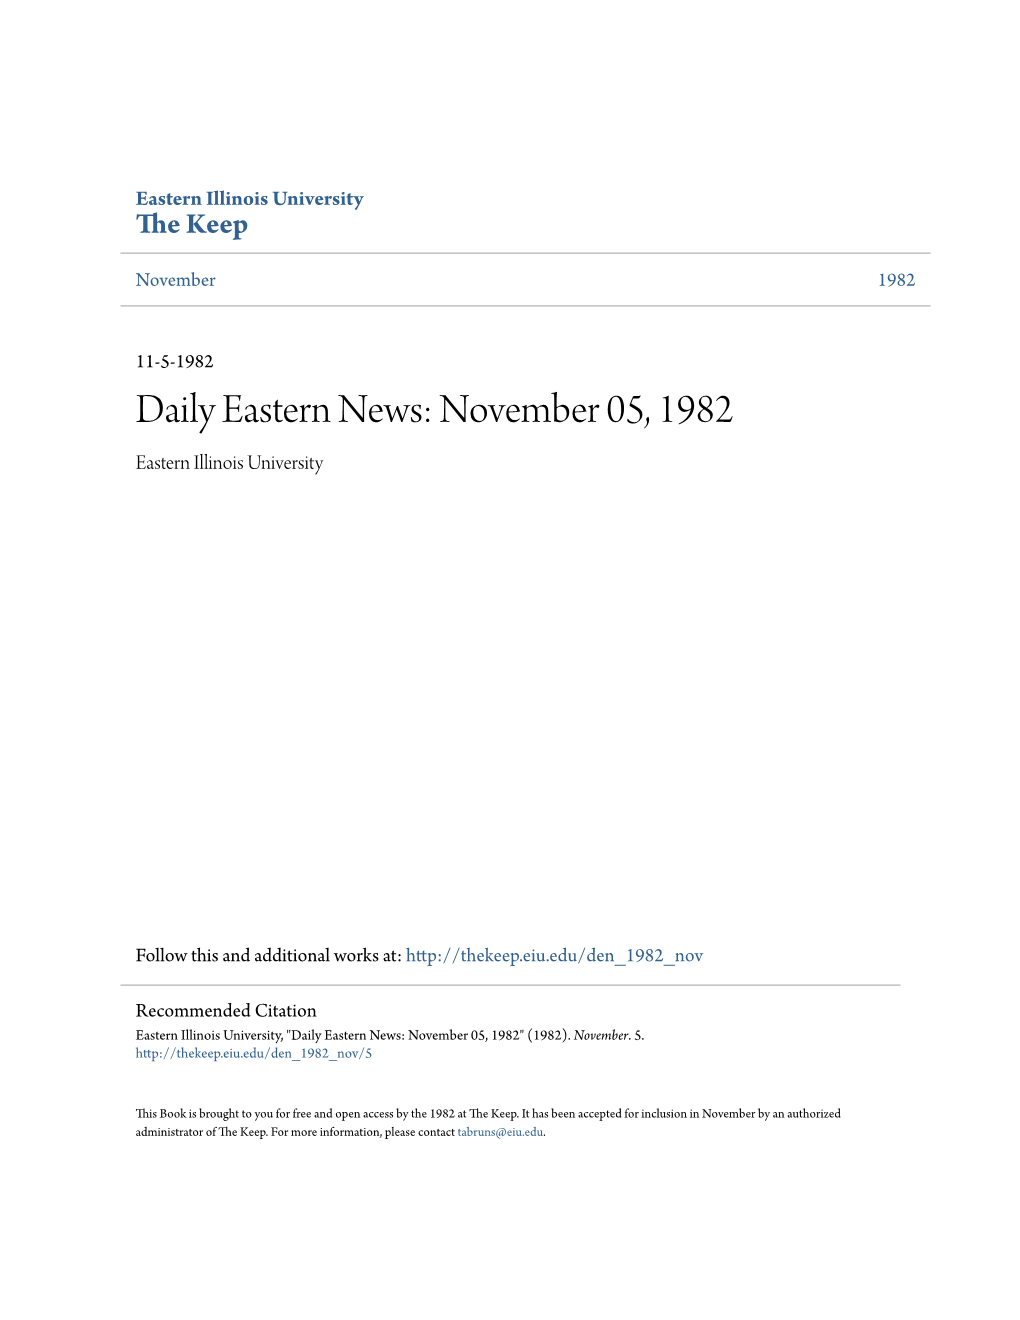 Daily Eastern News: November 05, 1982 Eastern Illinois University